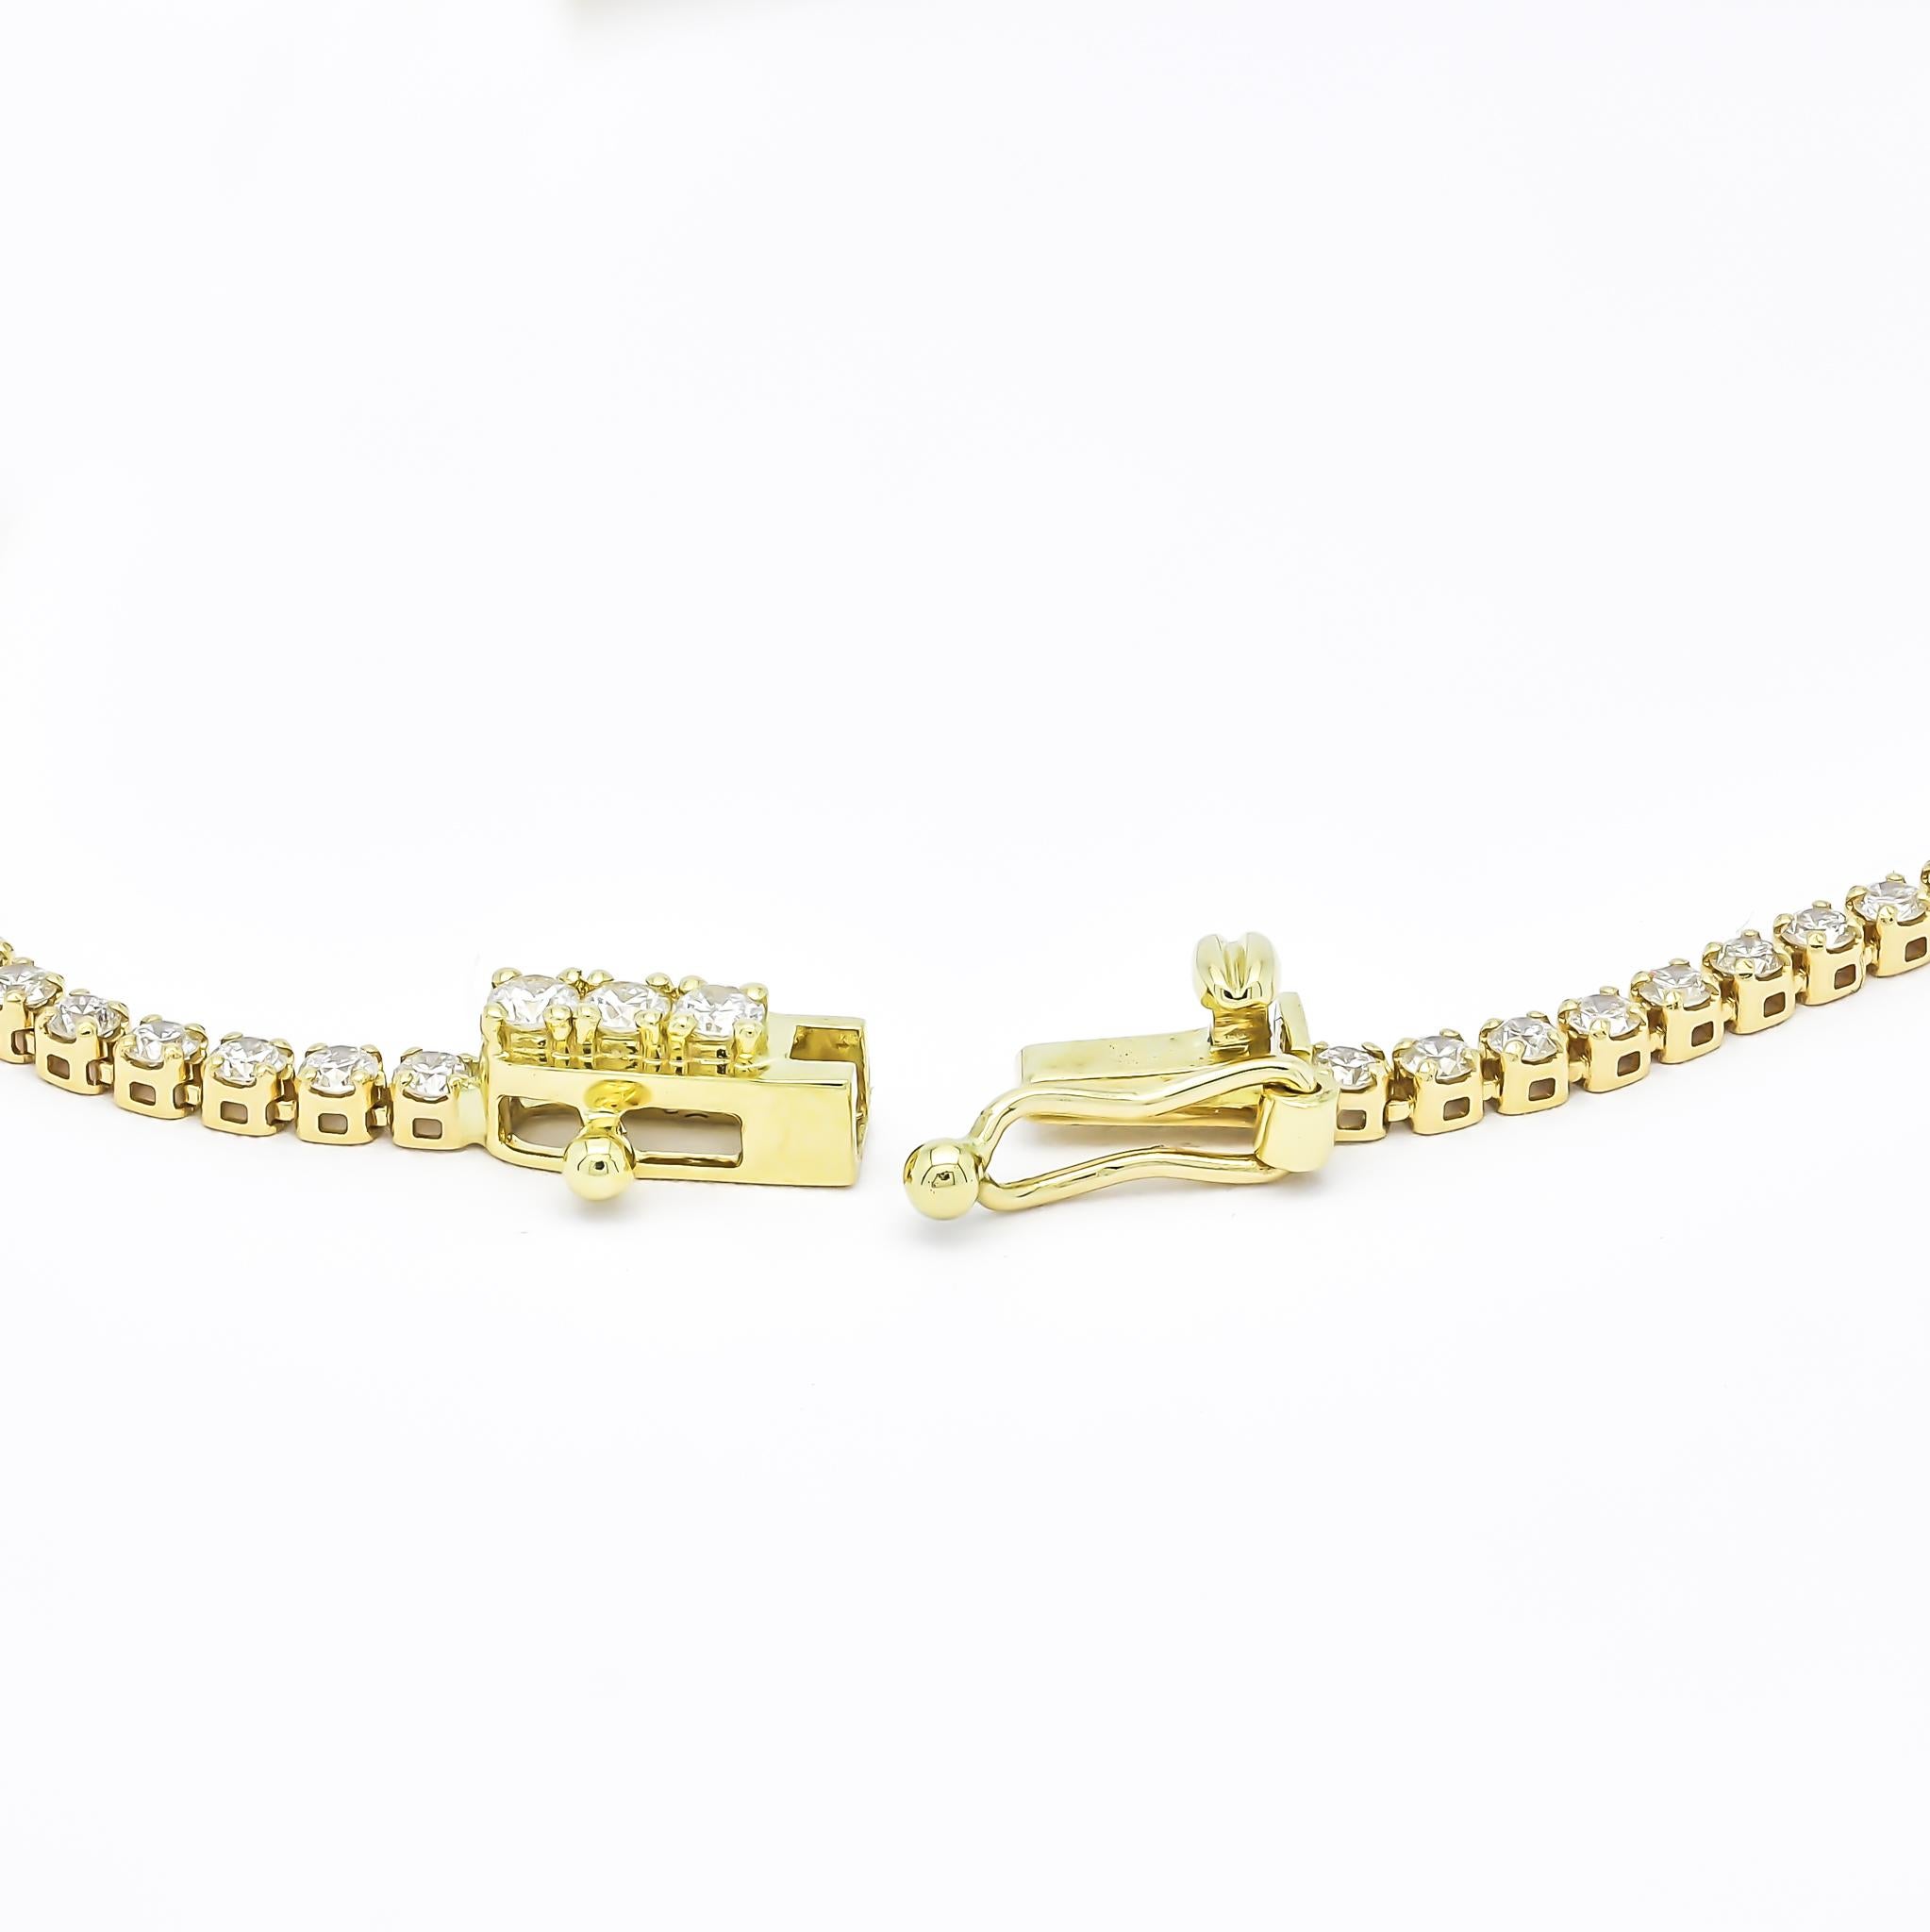 Brilliant Cut 18Kt Yellow Gold Single Row 4 Prong Natural Diamond Tennis Bracelet